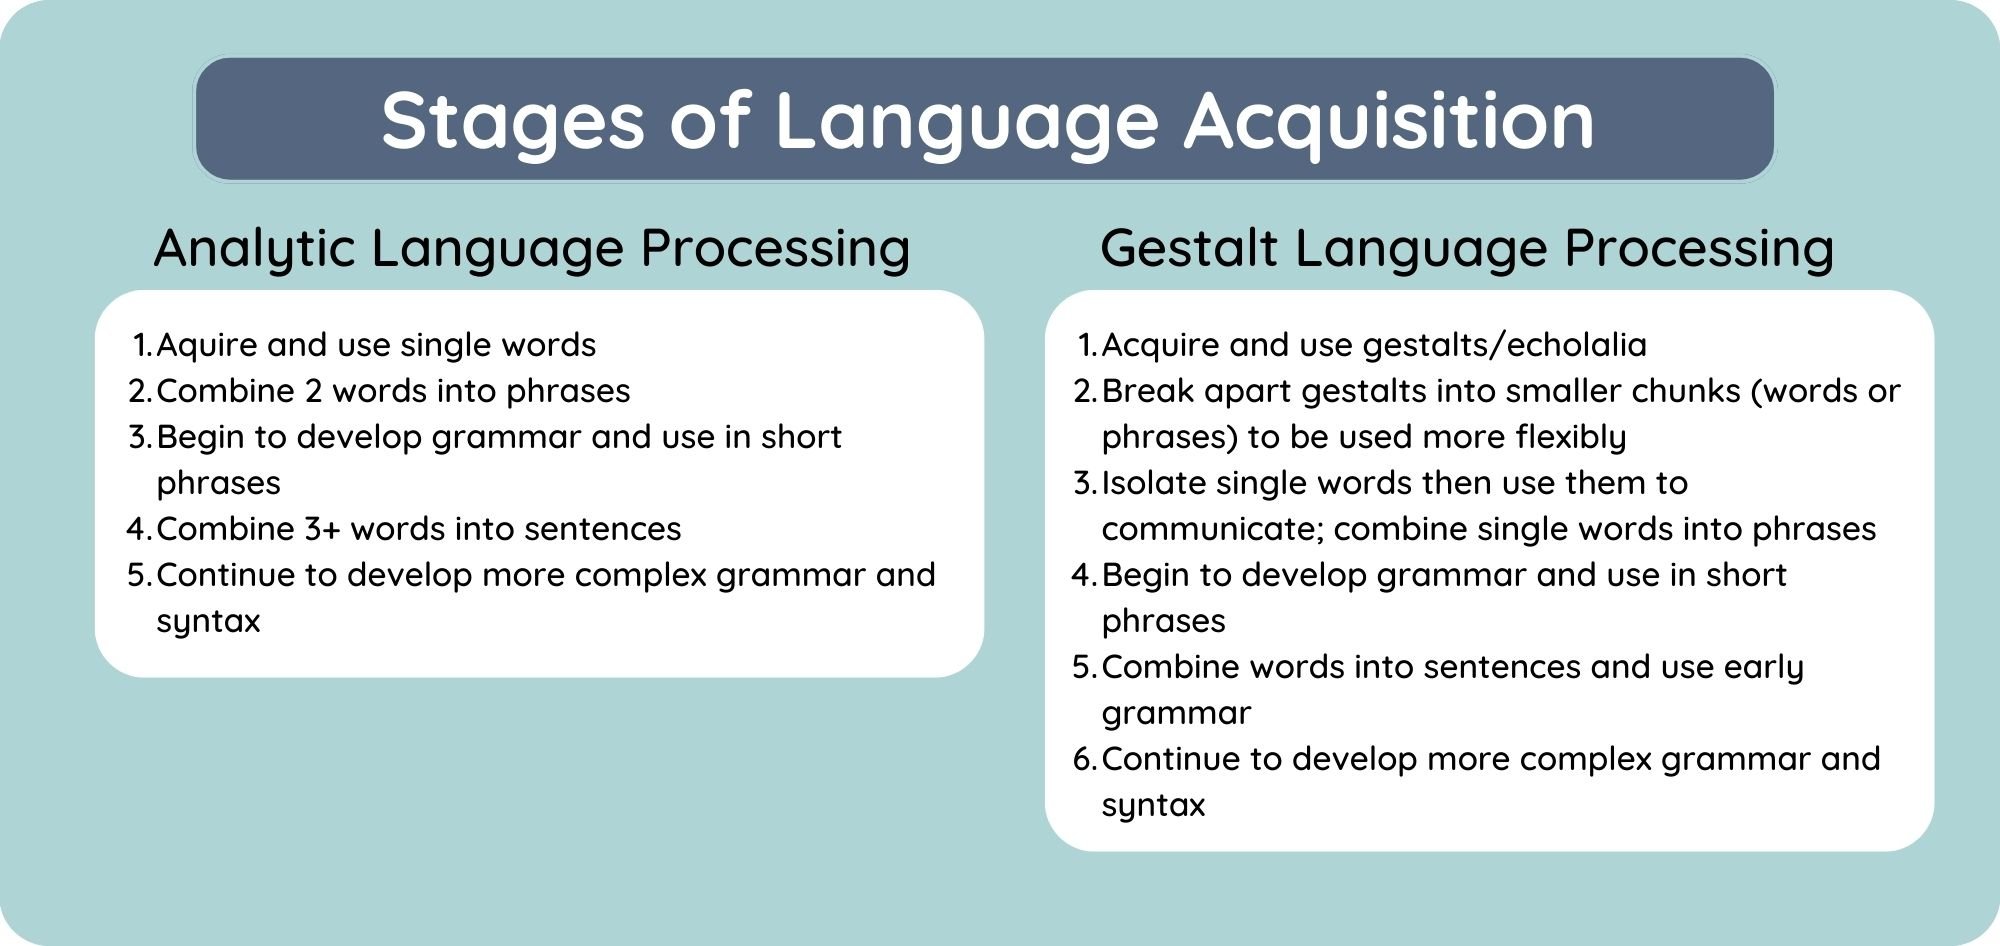 Gestalt language processing